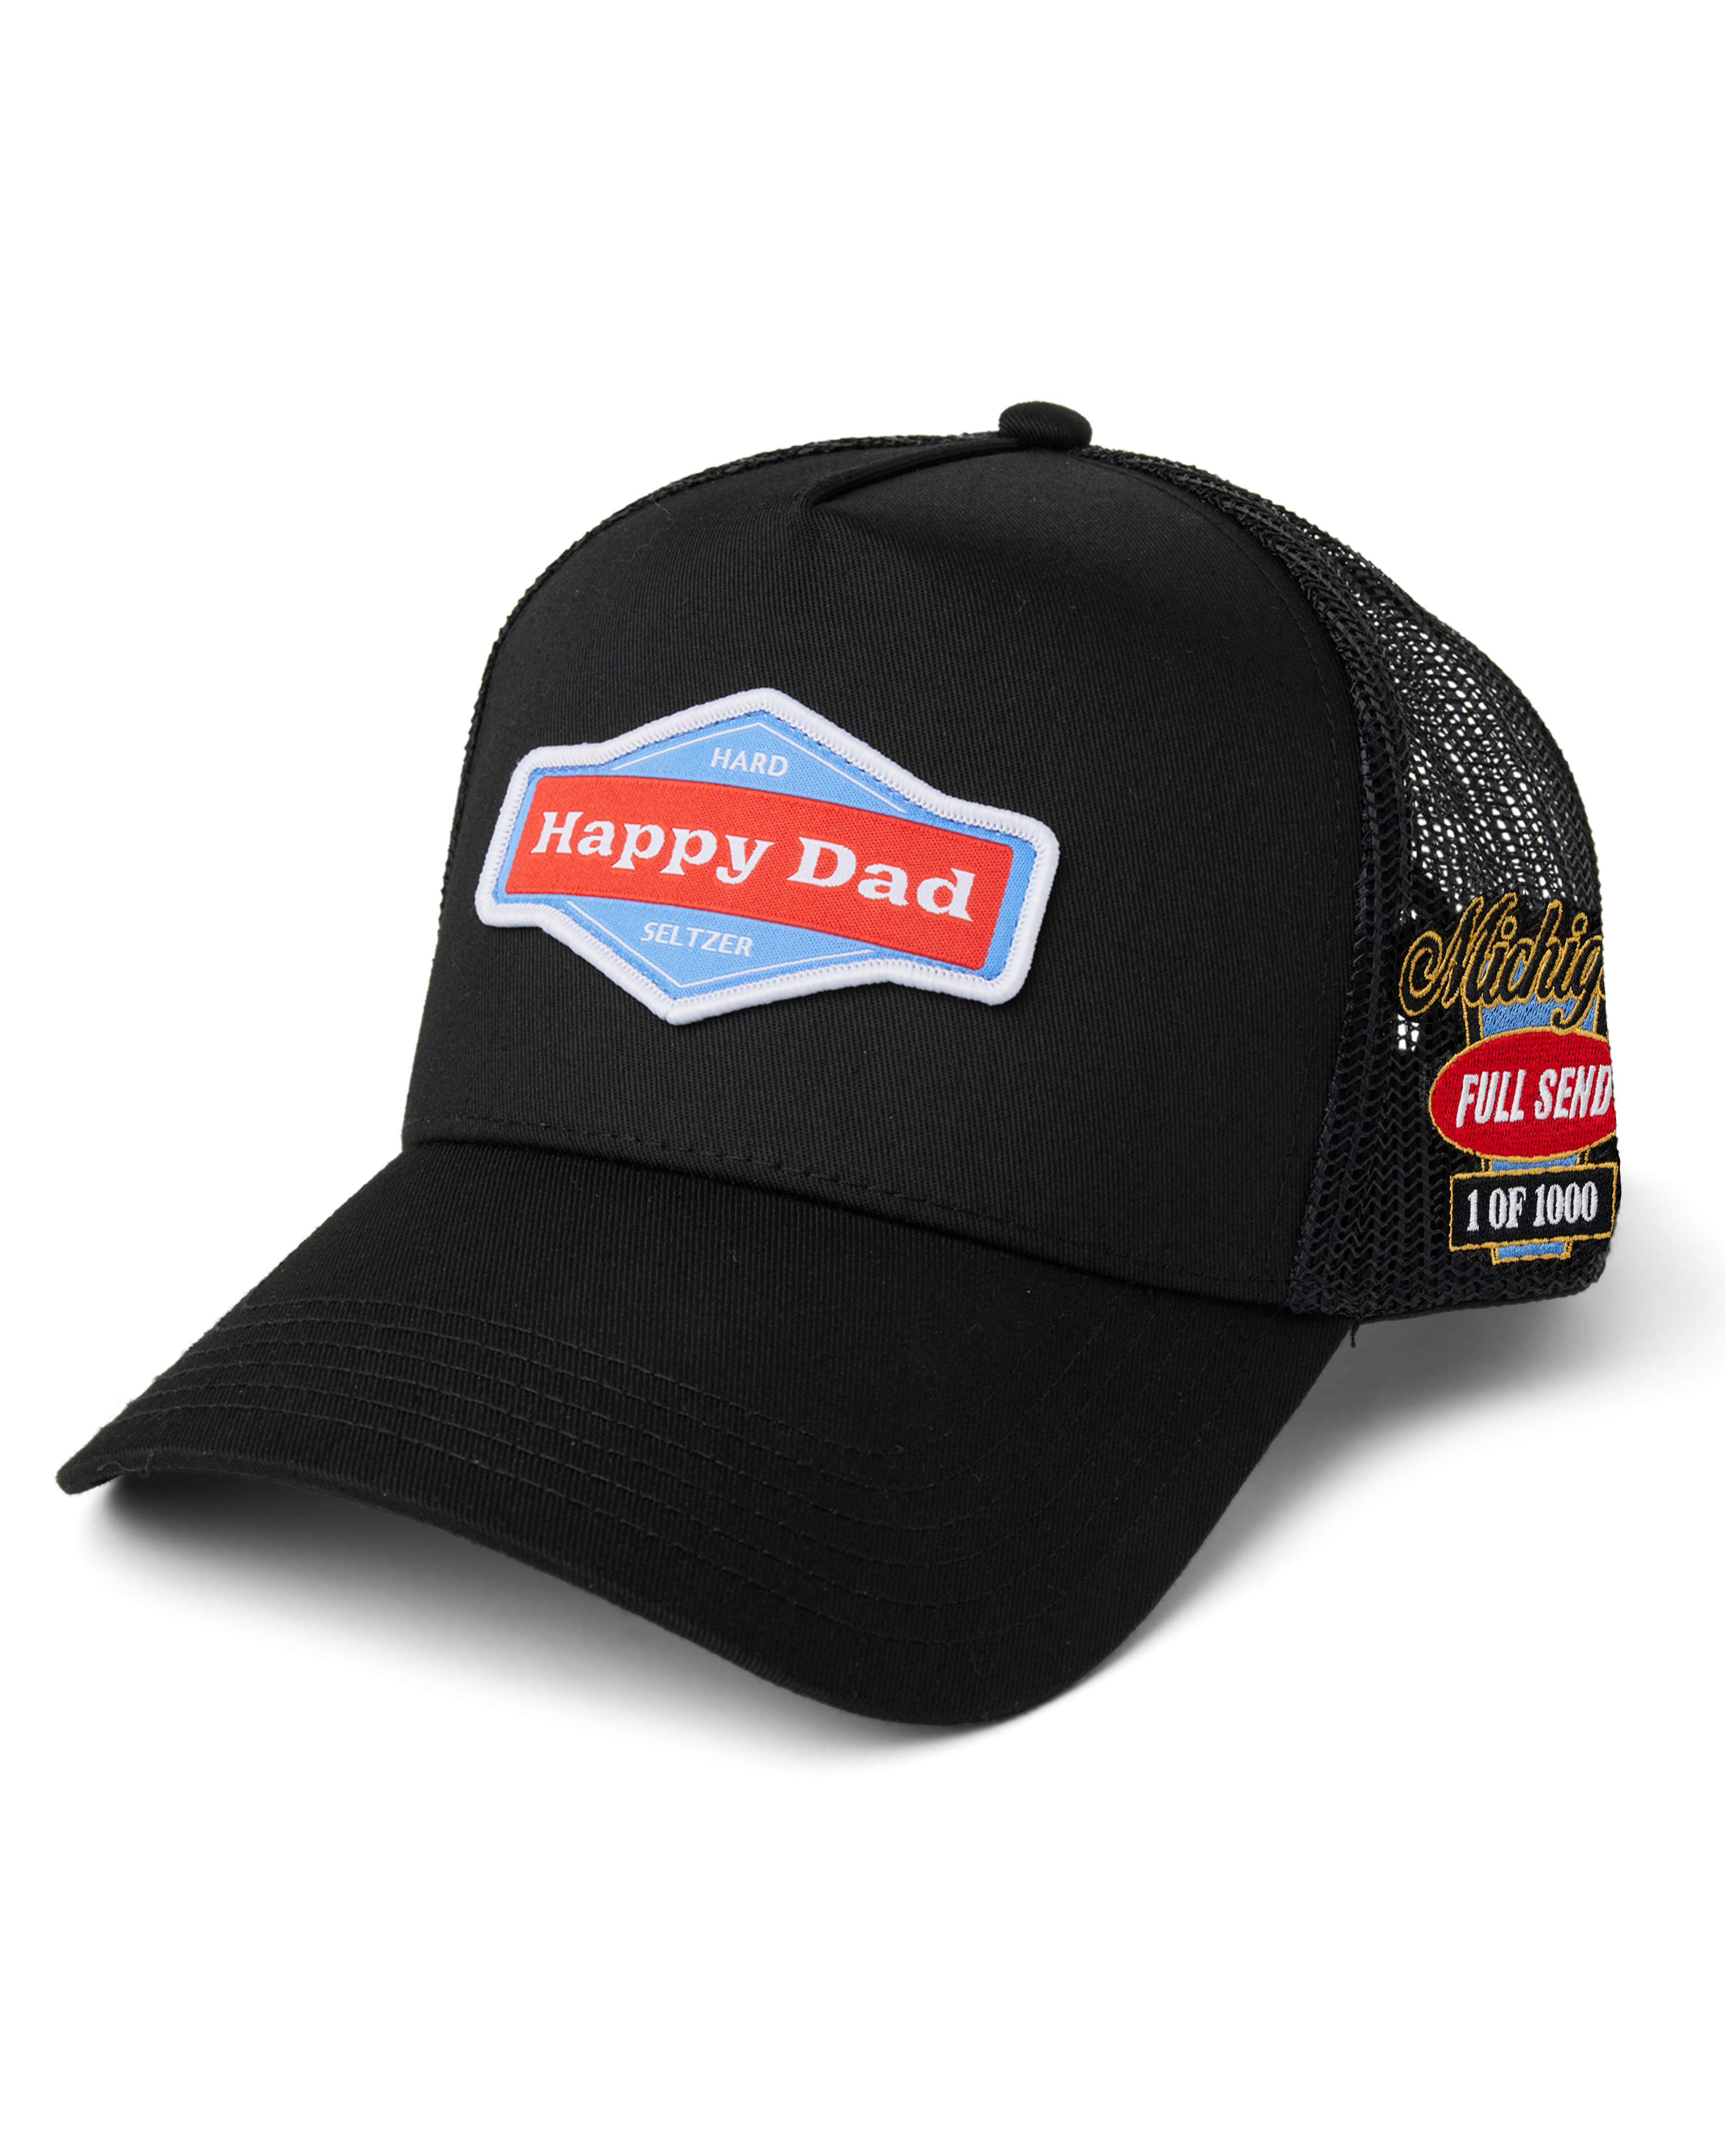 (Limited) Michigan - Happy Dad State Trucker Hat 1 of 1000